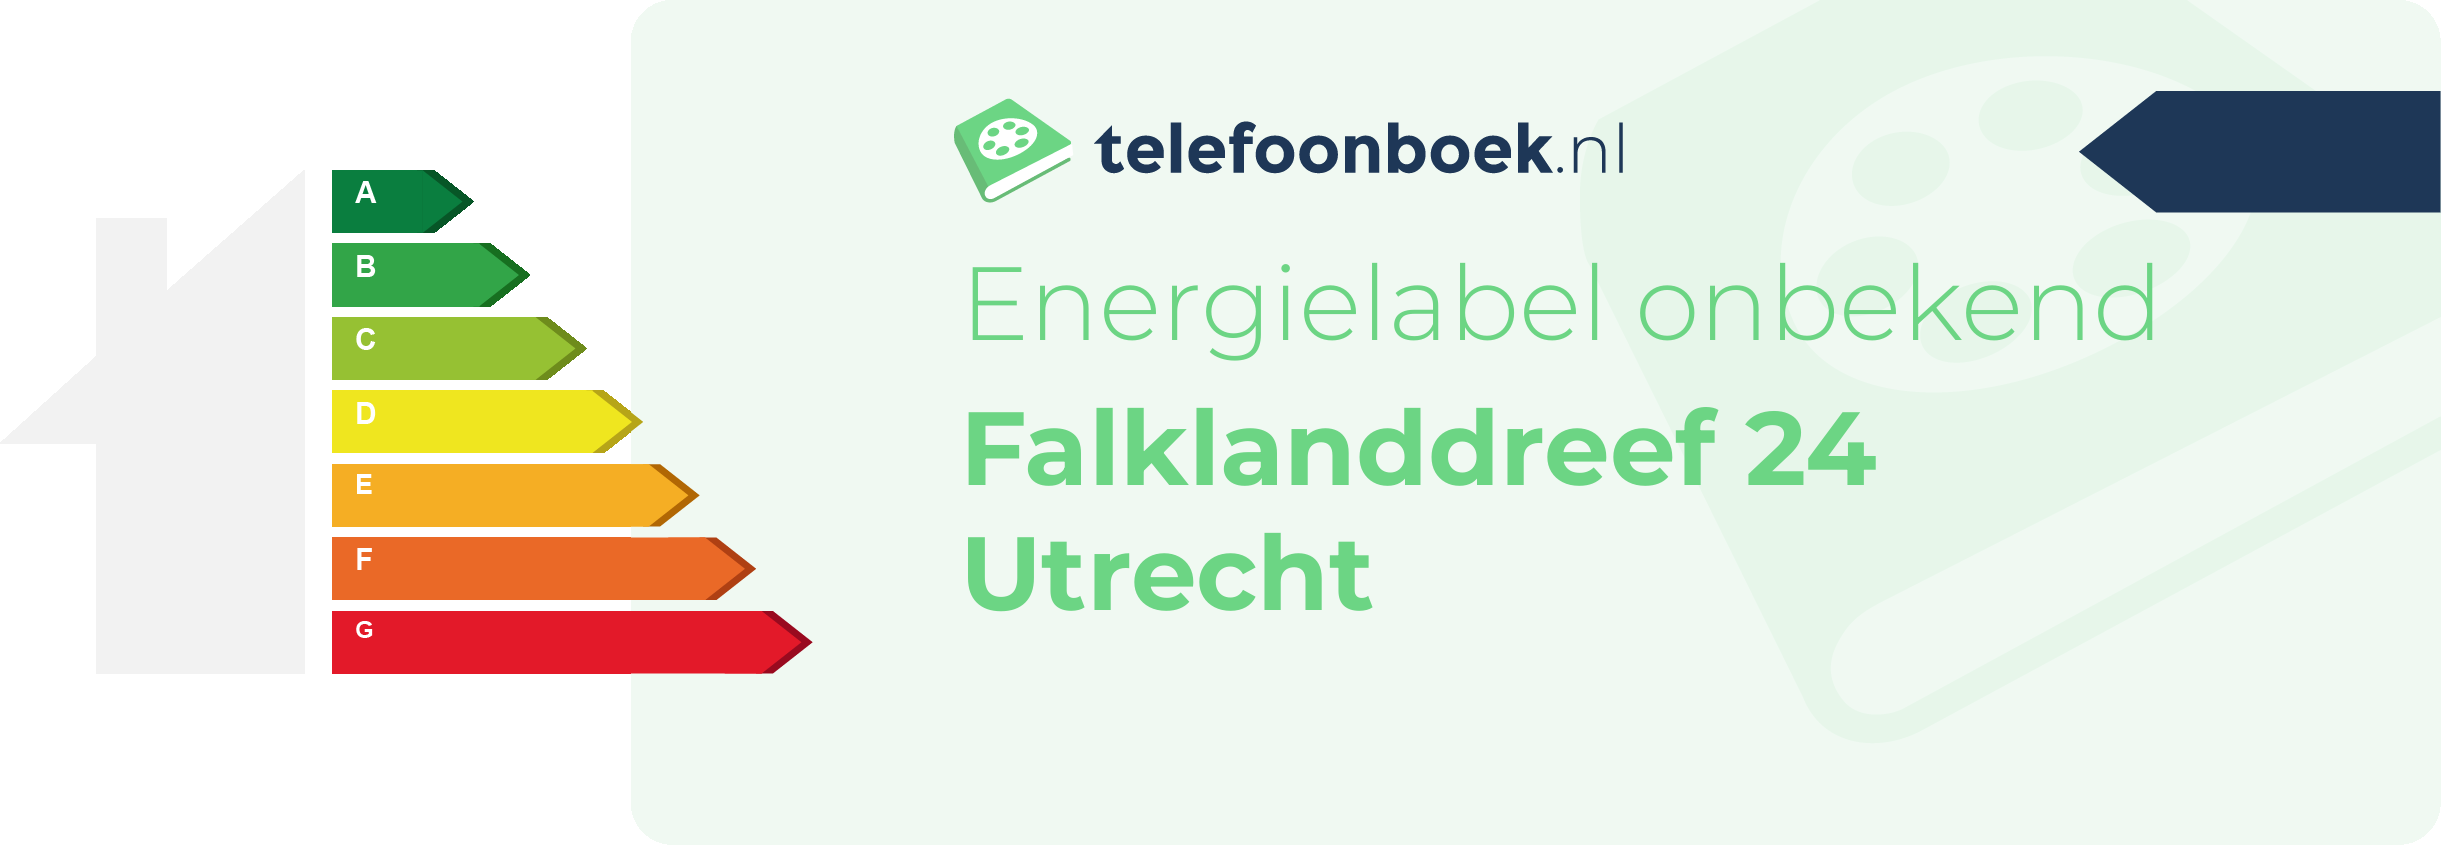 Energielabel Falklanddreef 24 Utrecht